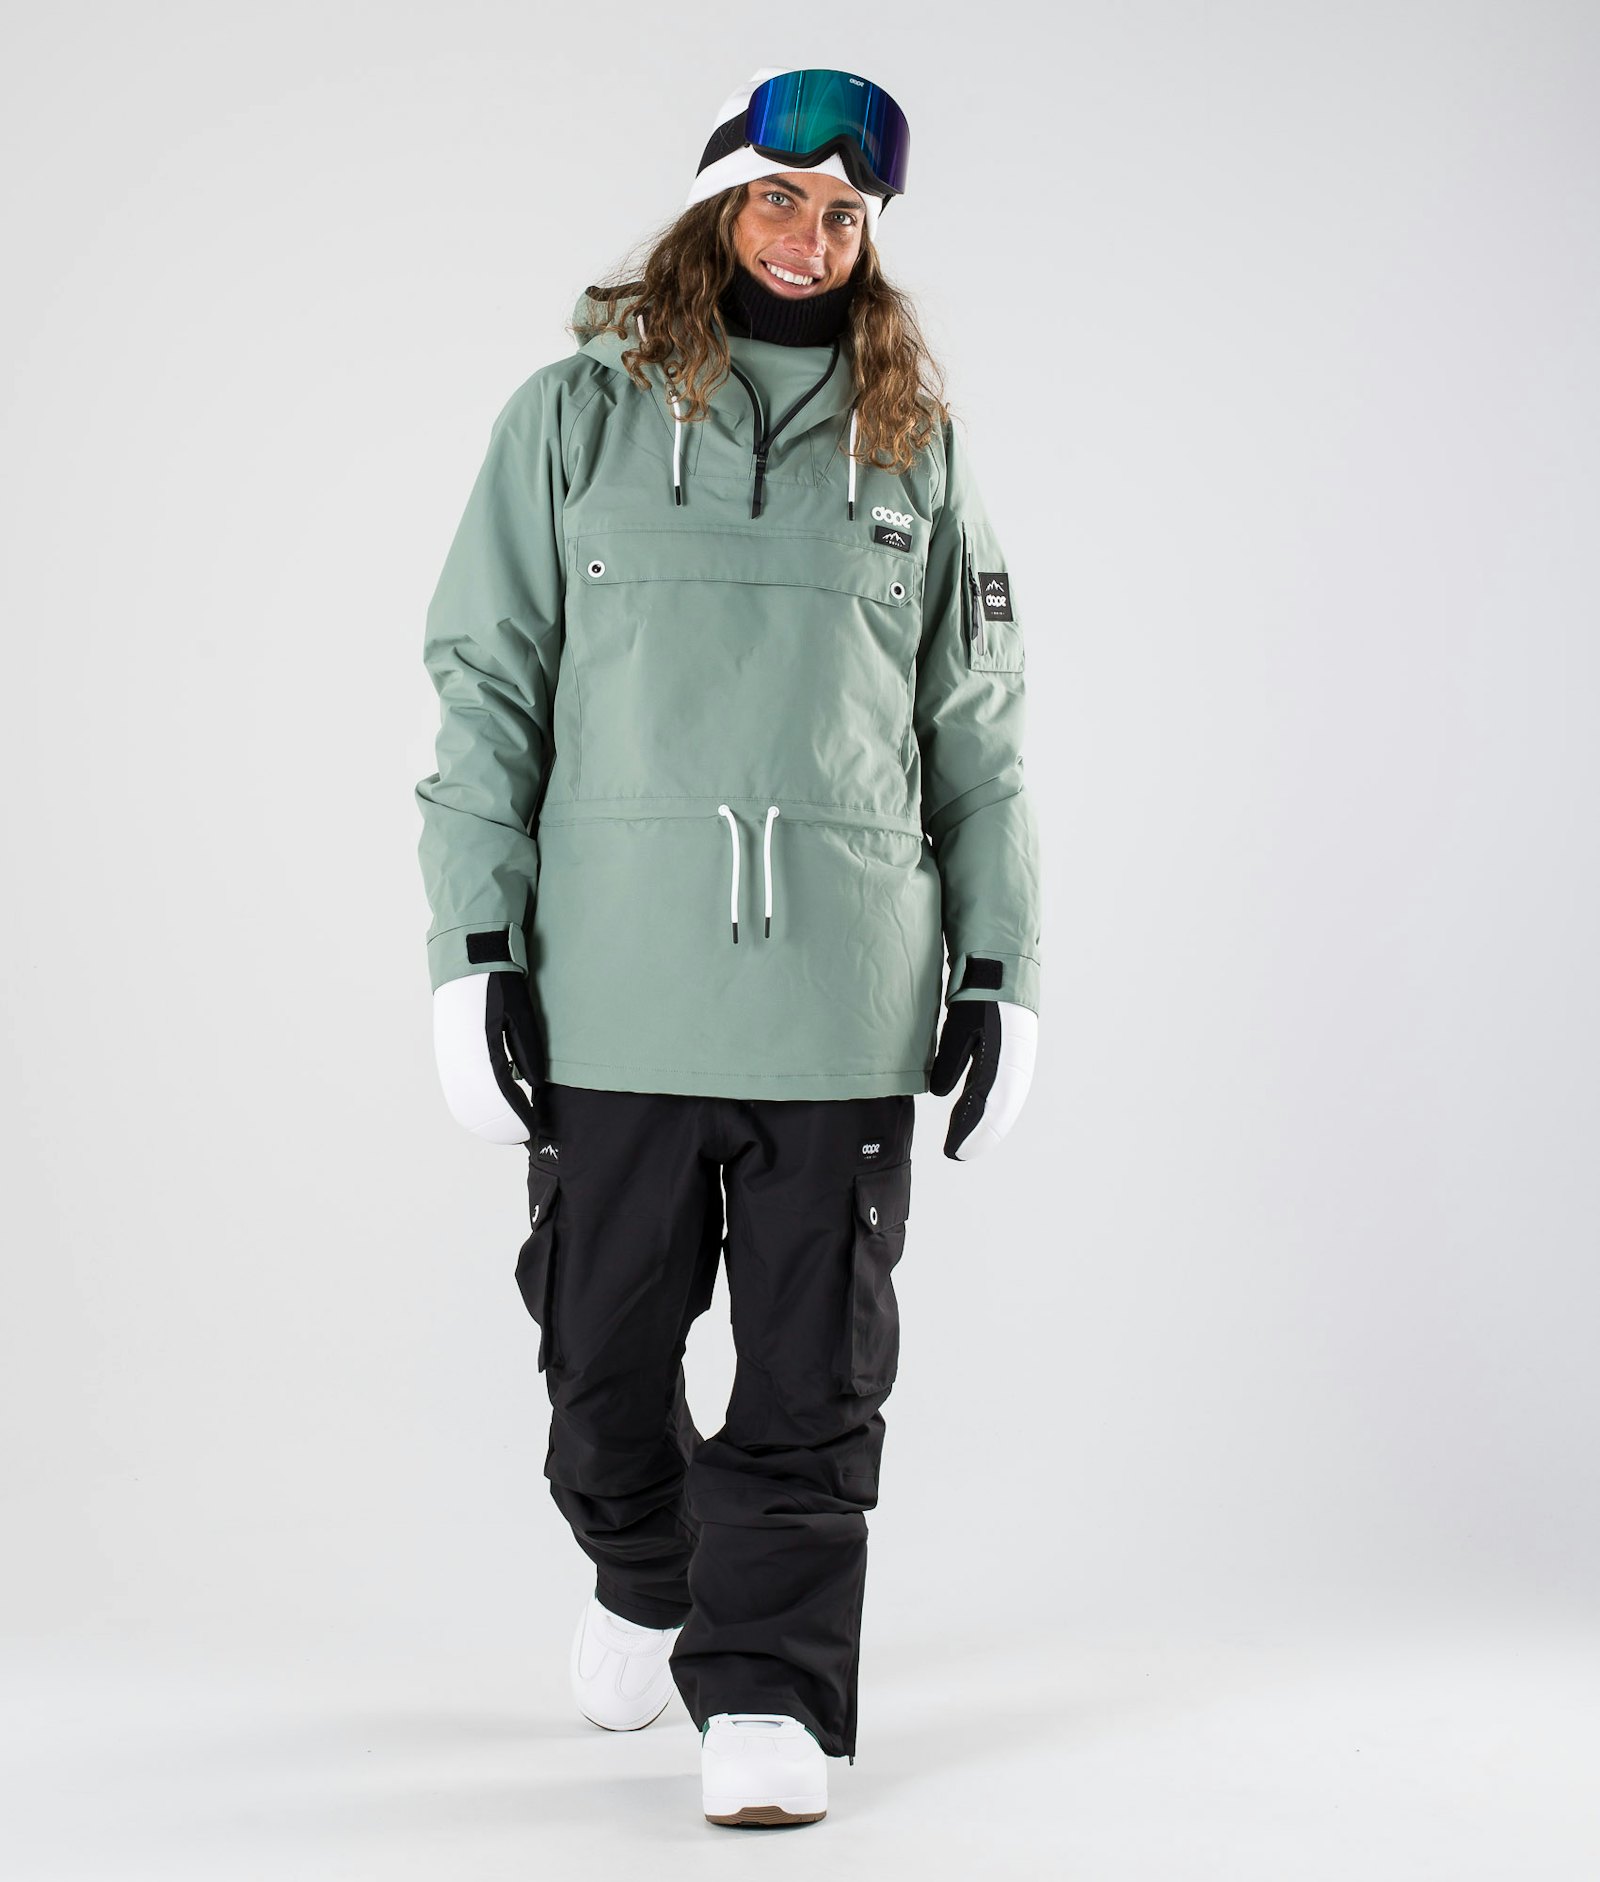 Annok 2019 Snowboard Jacket Men Faded Green